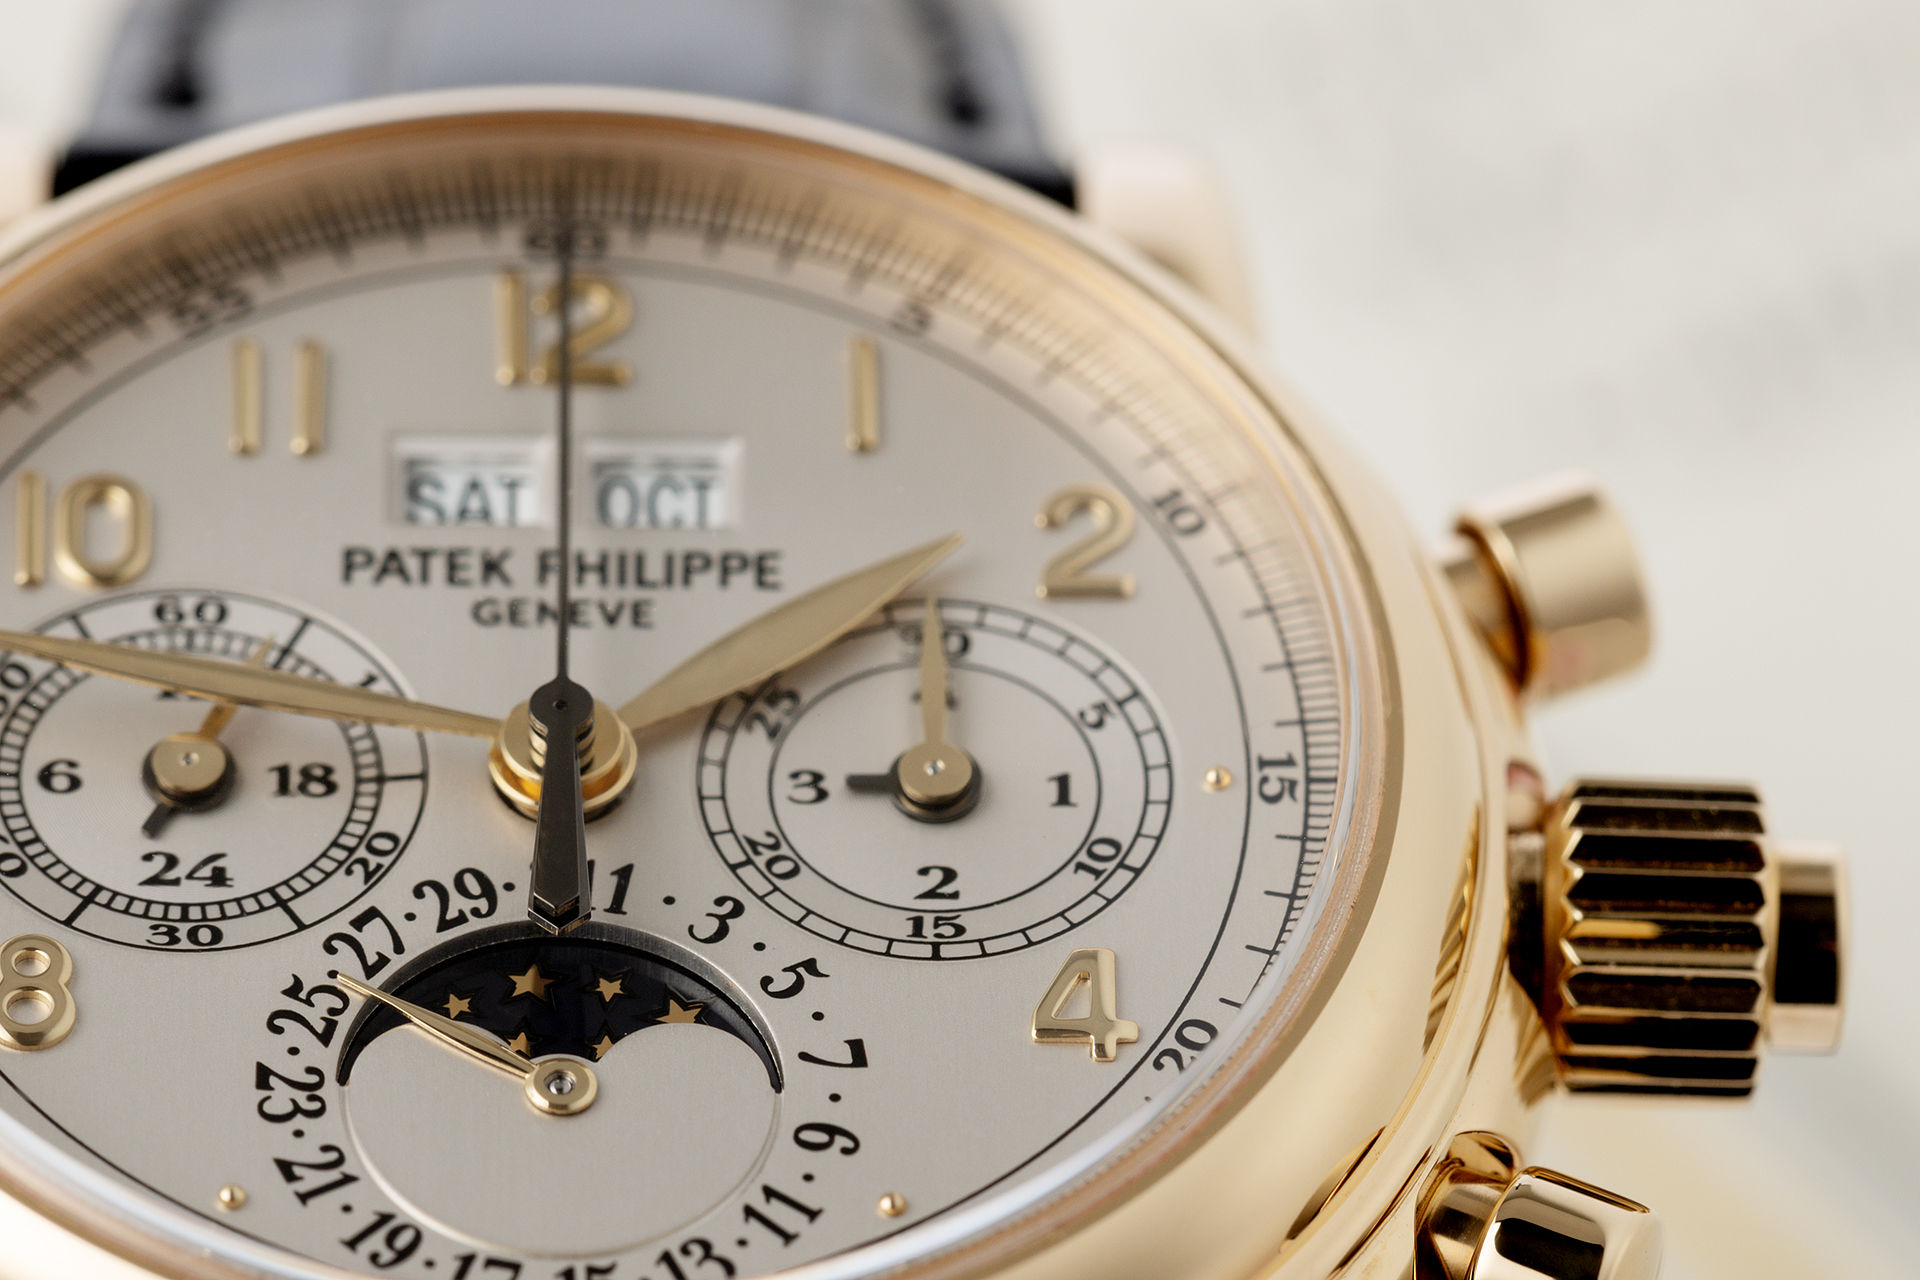 ref 5004J | 'Under Patek Warranty' Grand Complication | Patek Philippe Perpetual Calendar Chronograph